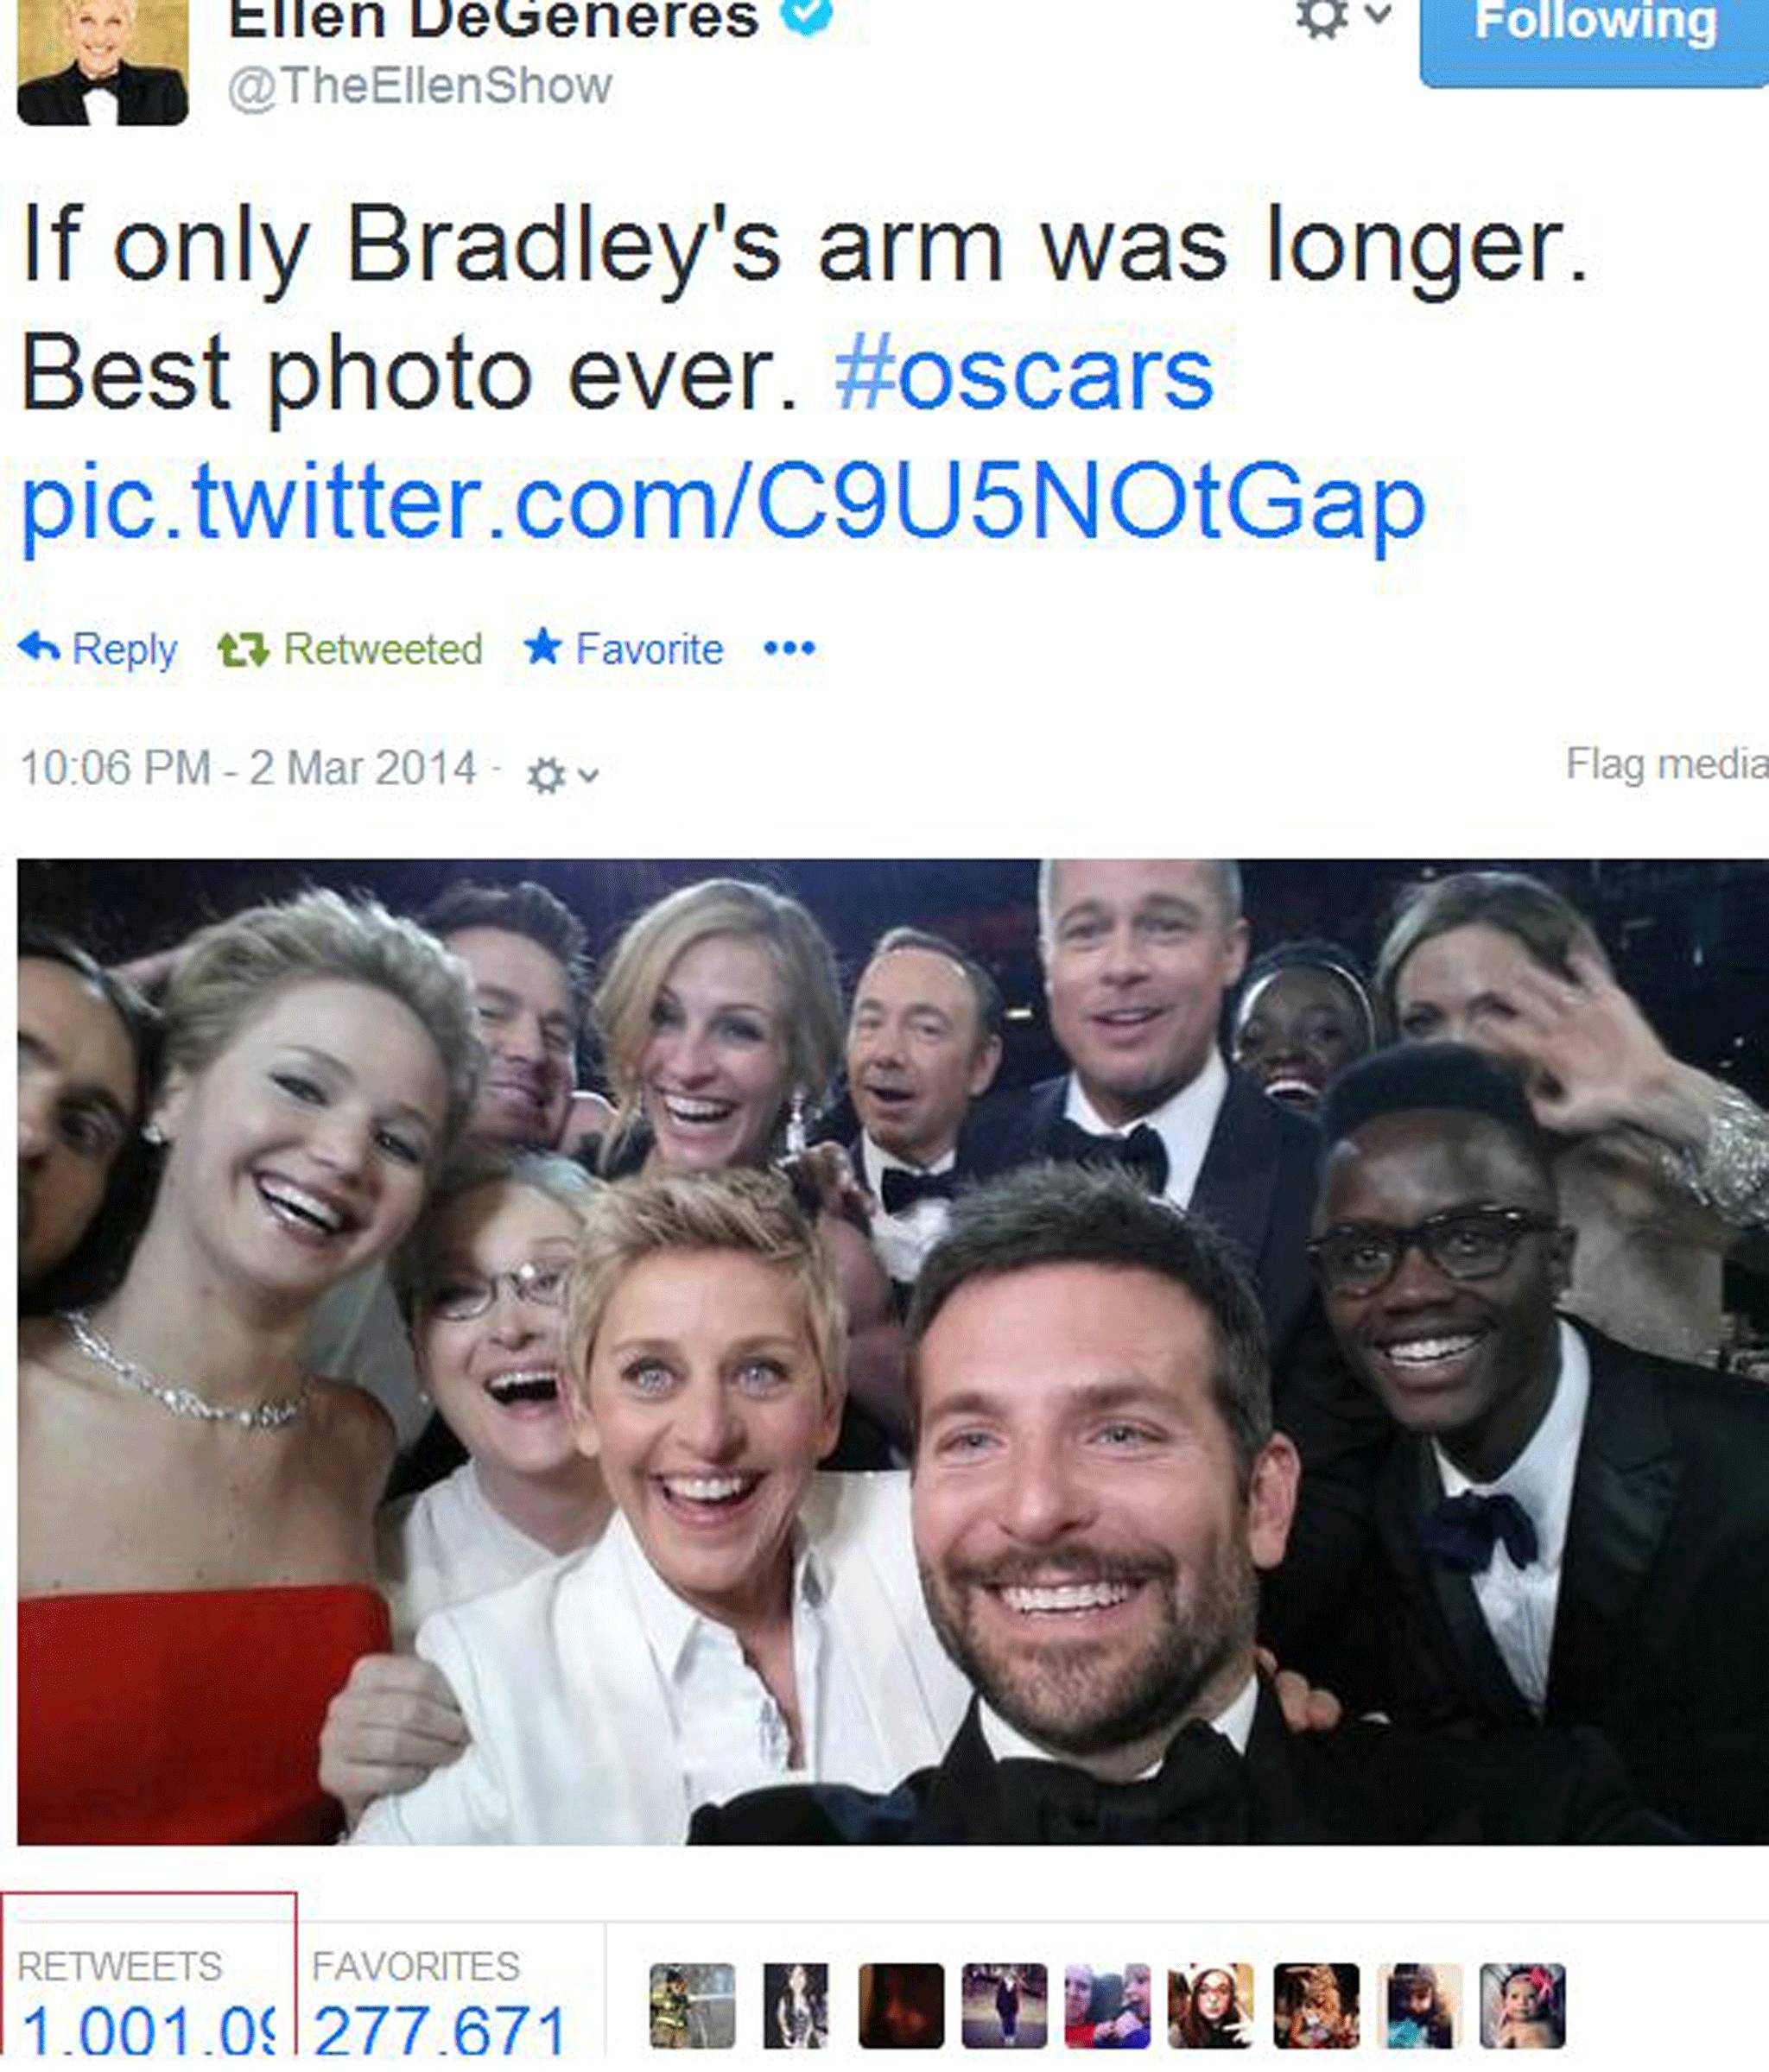 Ellen DeGeneres' selfie had more retweets than could fit on Twitter